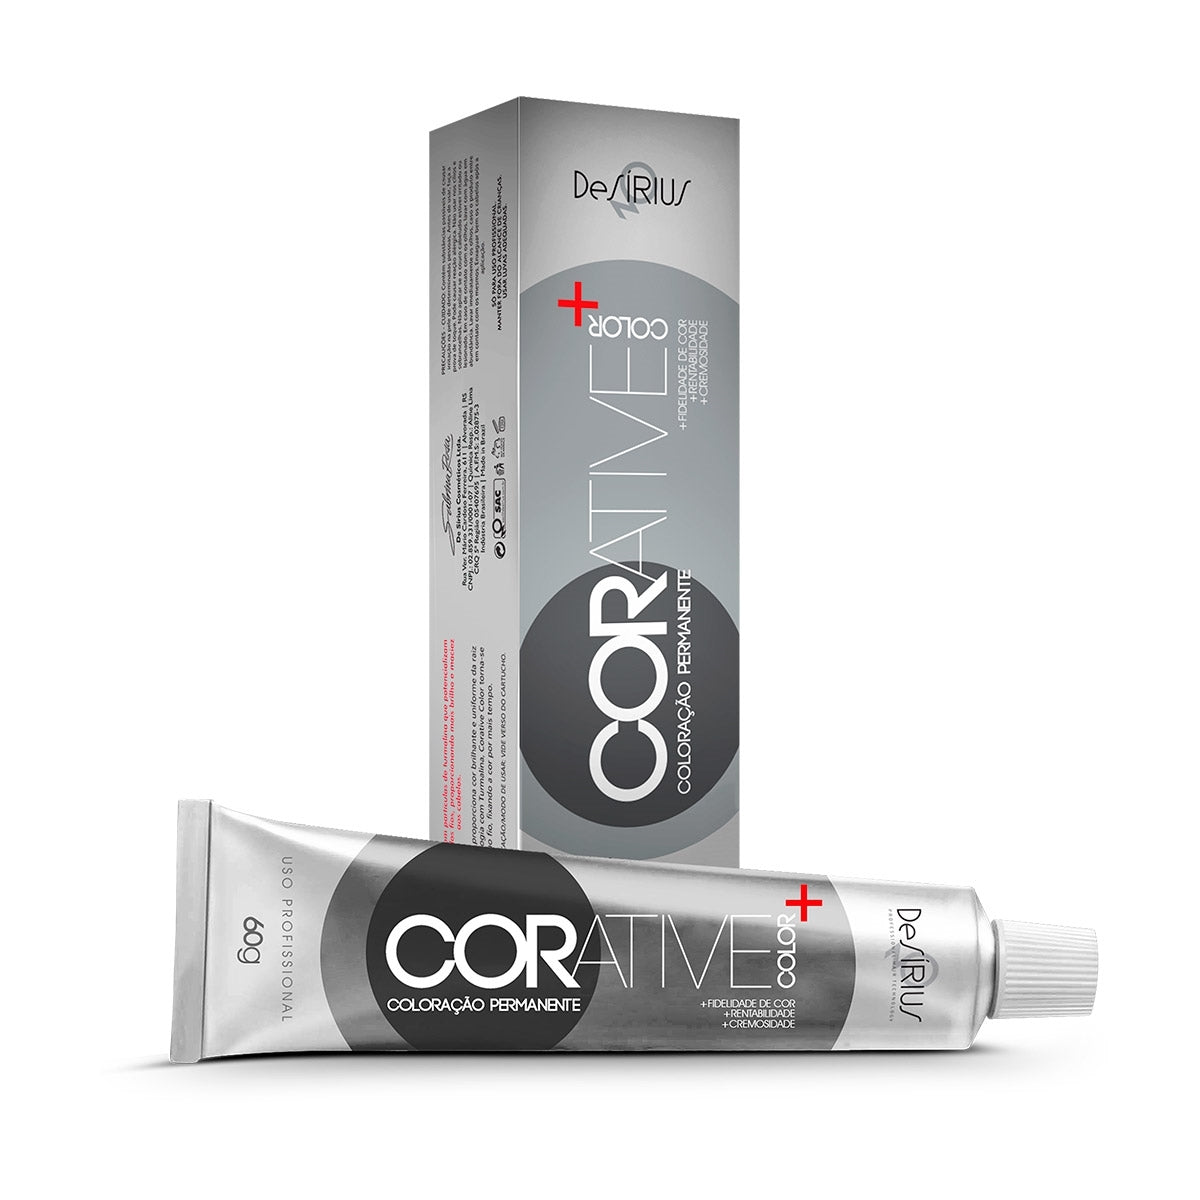 CORATIVE COLORATION - 10.0 VERY LIGHT BLOND - 60G FS Cosmetics